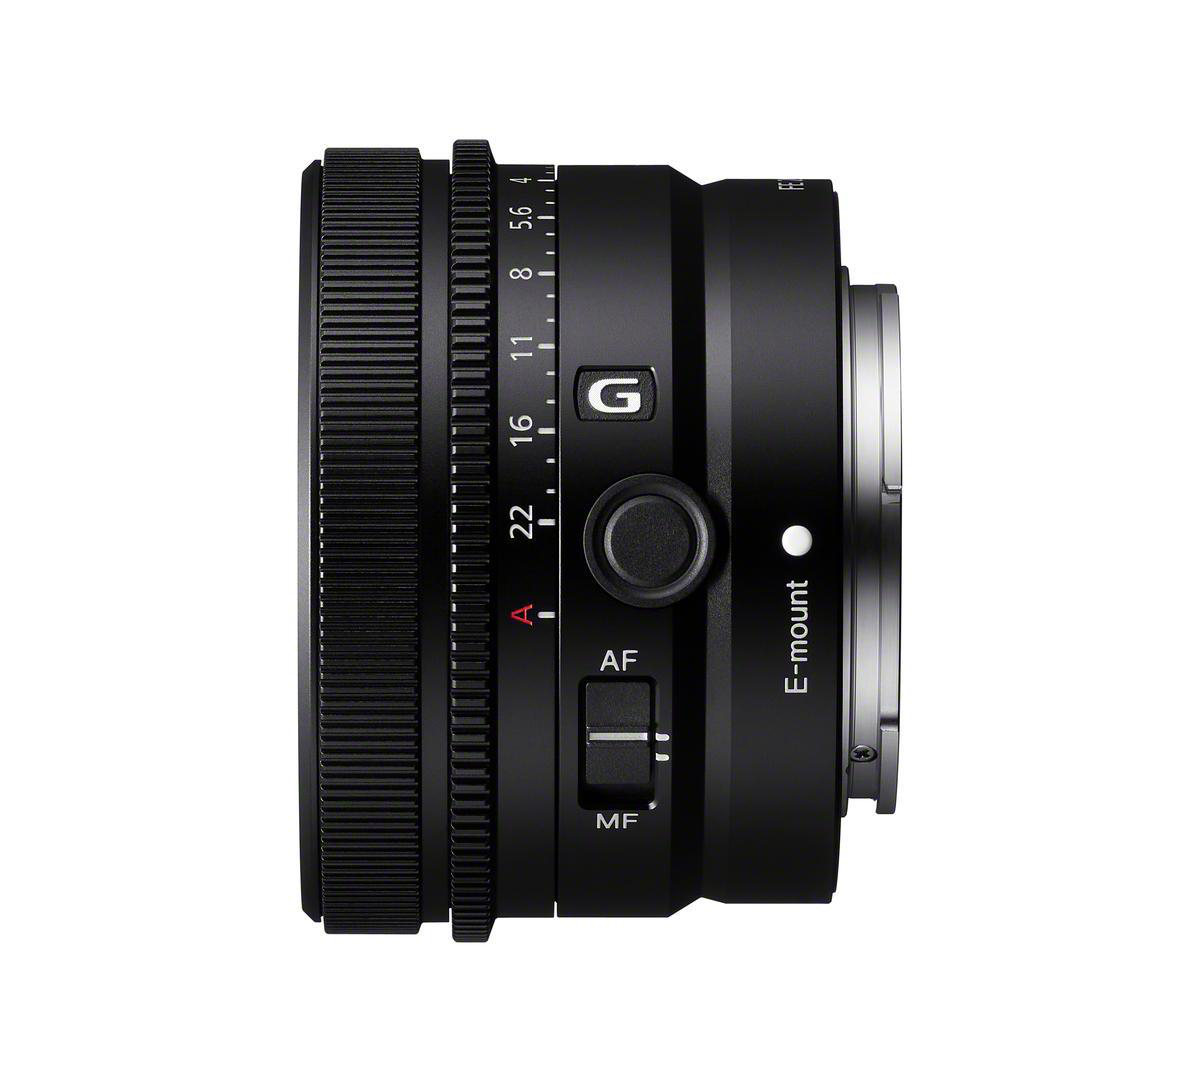 f/2.5 (Objektiv Circulare Sony mm DMR FHB, SEL50F25G SONY - Blende, Schwarz) 50 IF, G-Lens, für E-Mount, Vollformat